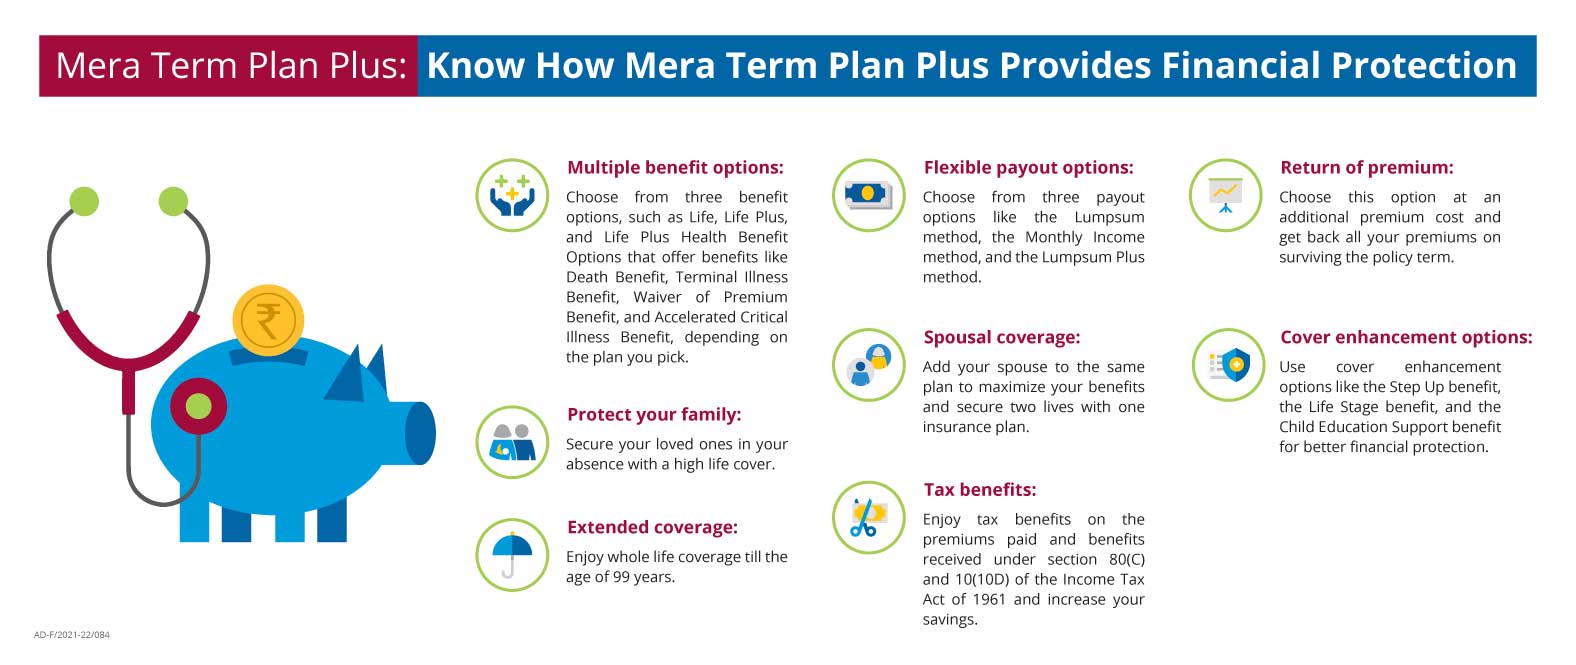 Benefits of Mera Term Plan Plus